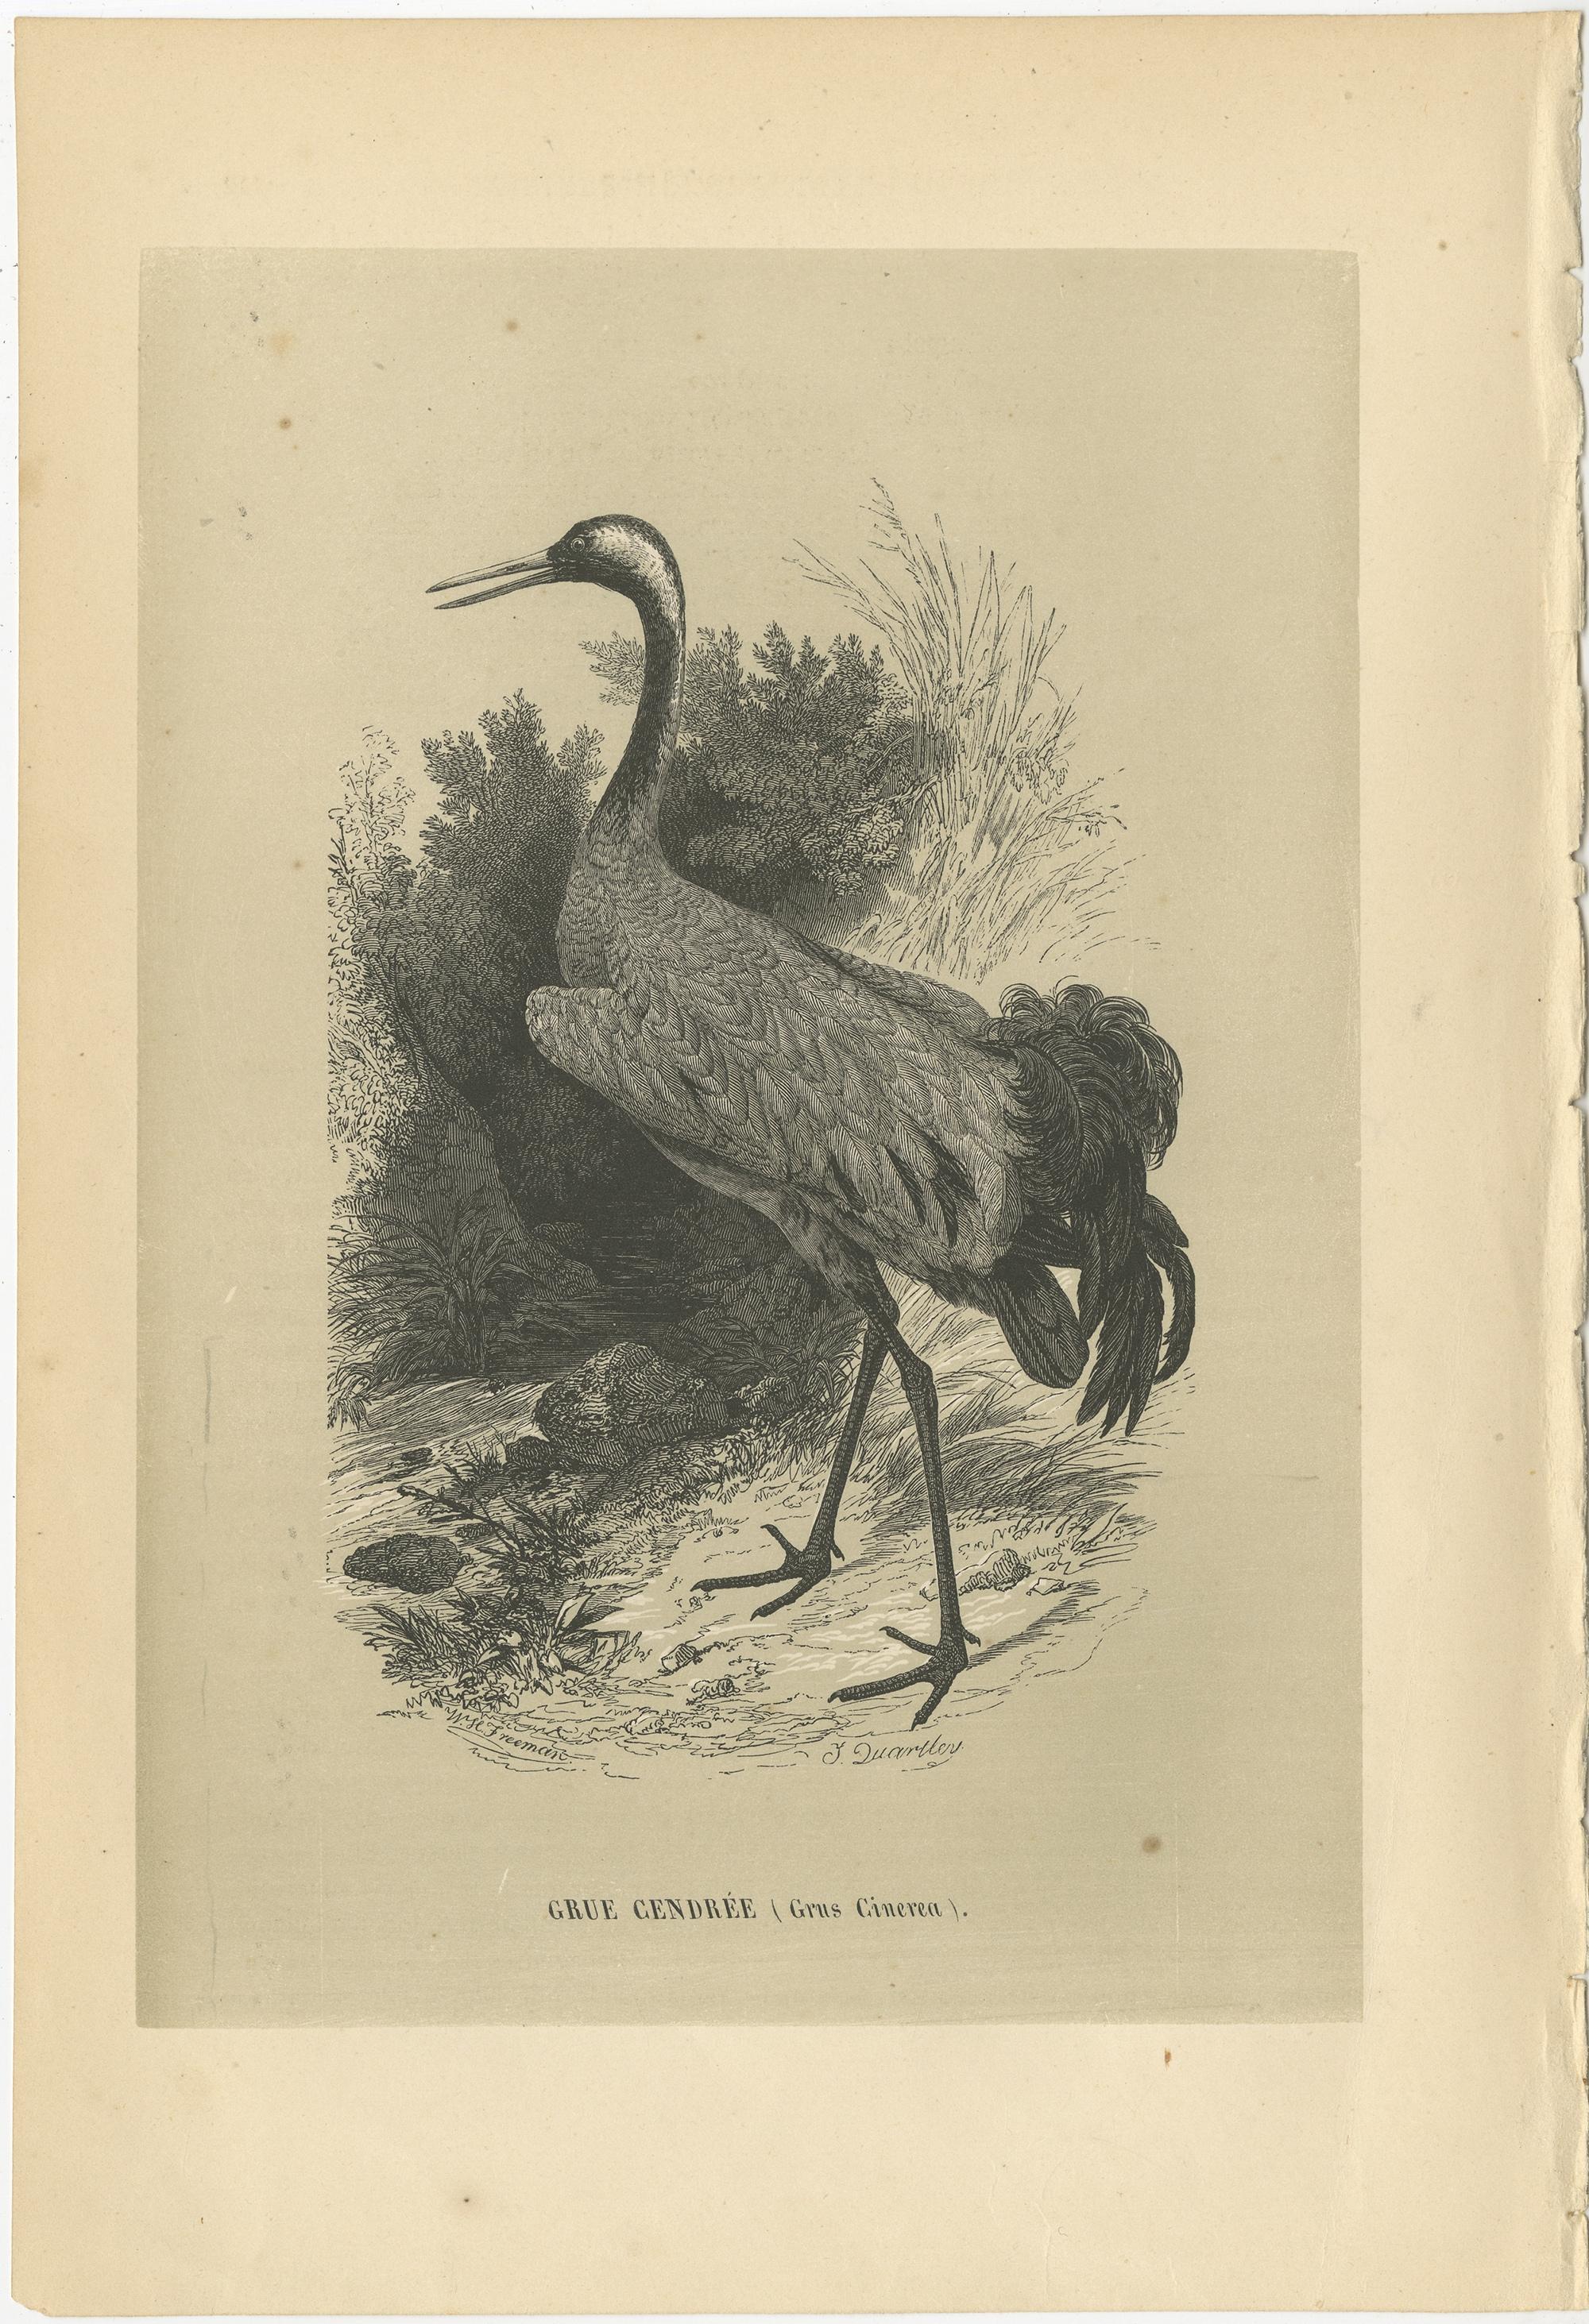 Antique bird print titled 'Grue Gendrée'. Original print of a common crane. This print originates from 'Histoire Naturelle des Oiseaux' by M. Emm. le Maout. Published 1853.

The common crane (Grus grus), also known as the Eurasian crane, is a bird